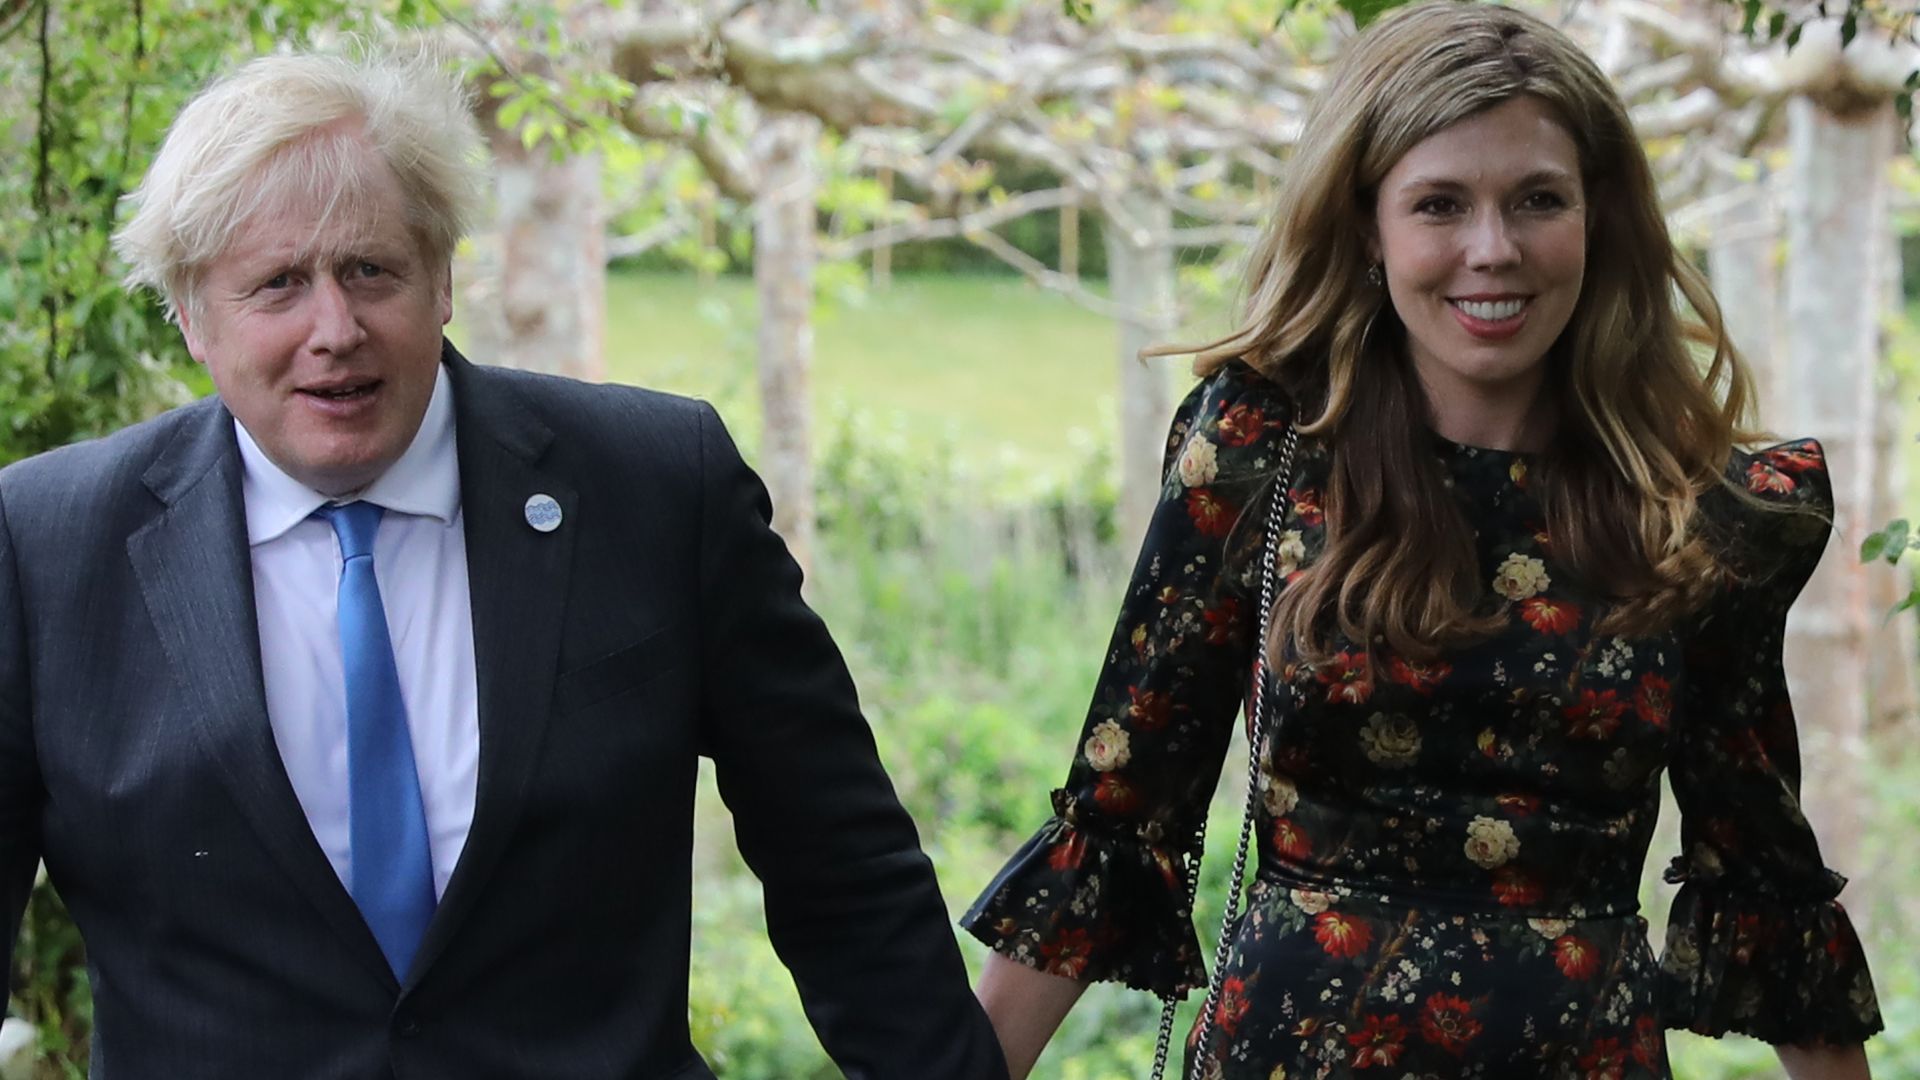  Boris Johnson and his wife Carrie Johnson walking through a floral arch in a garden